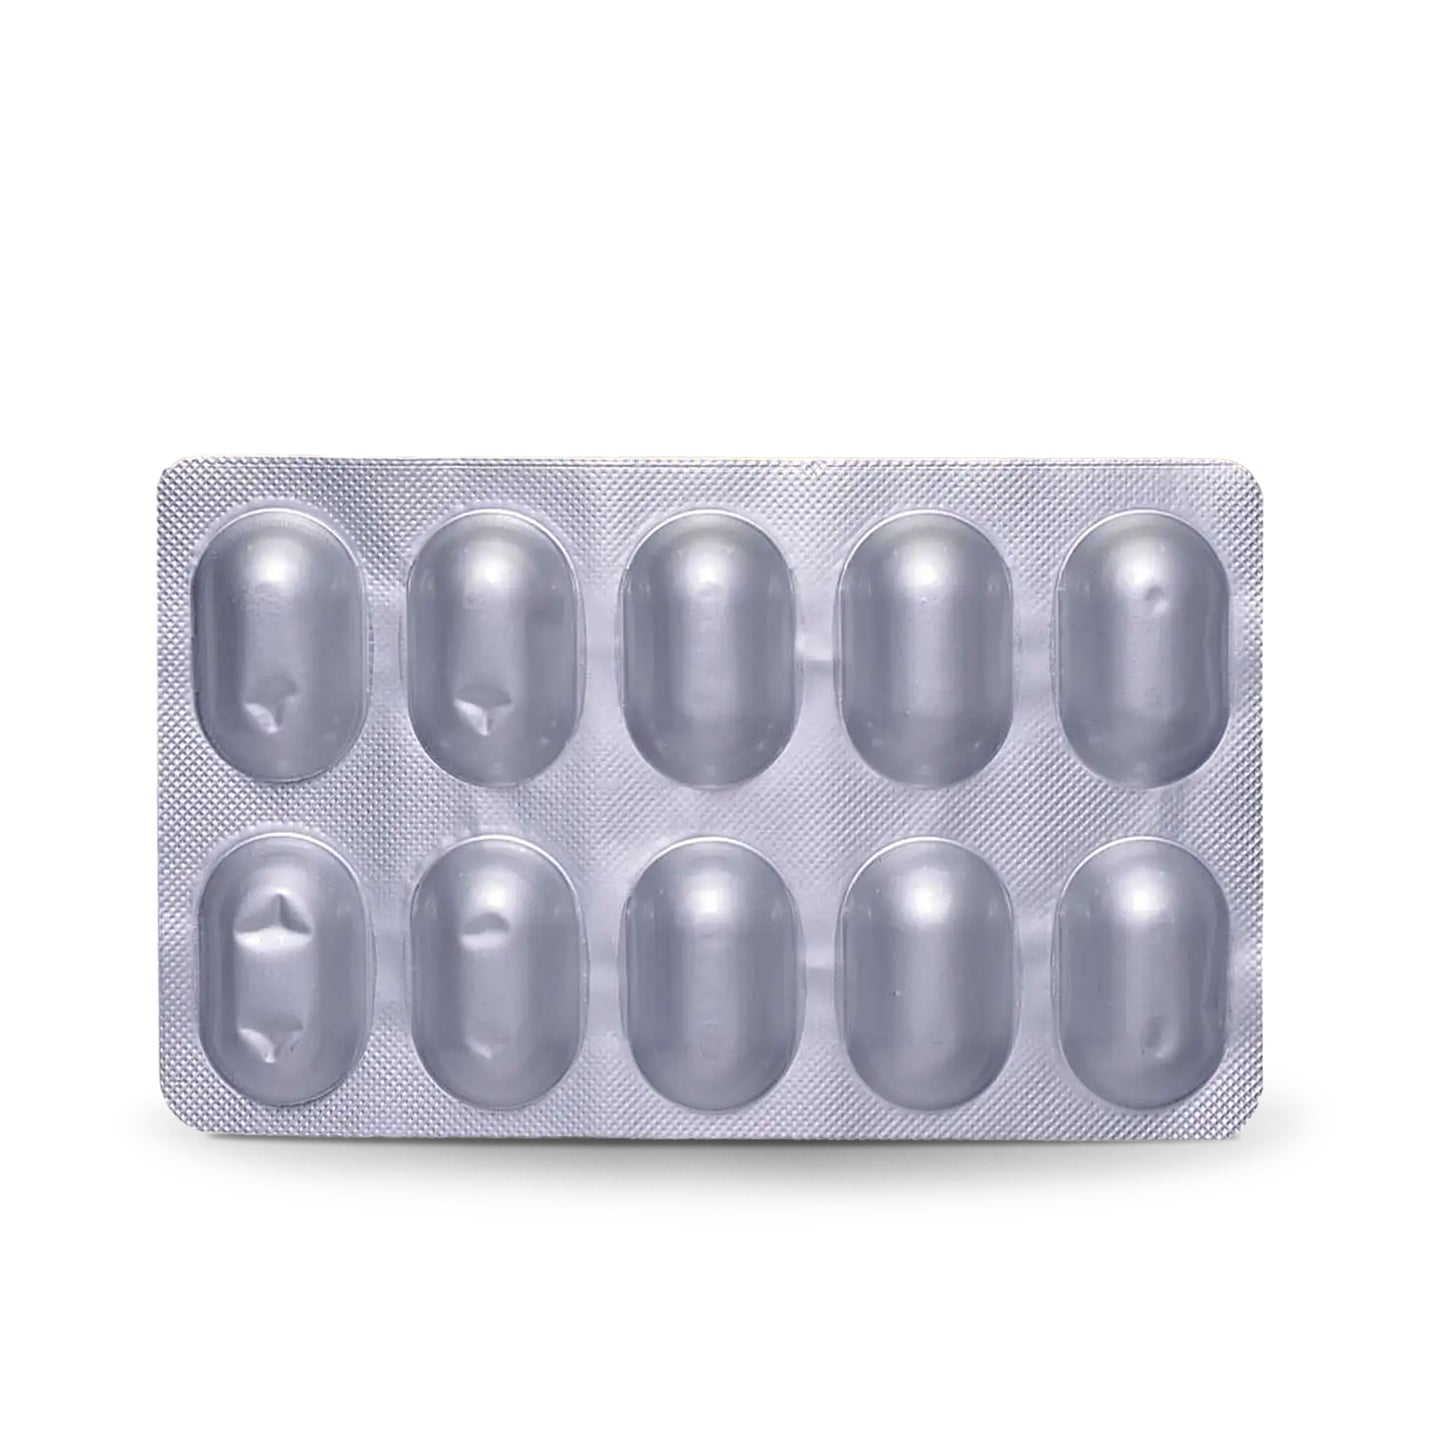 Tiam 100mg, 10 Tablets